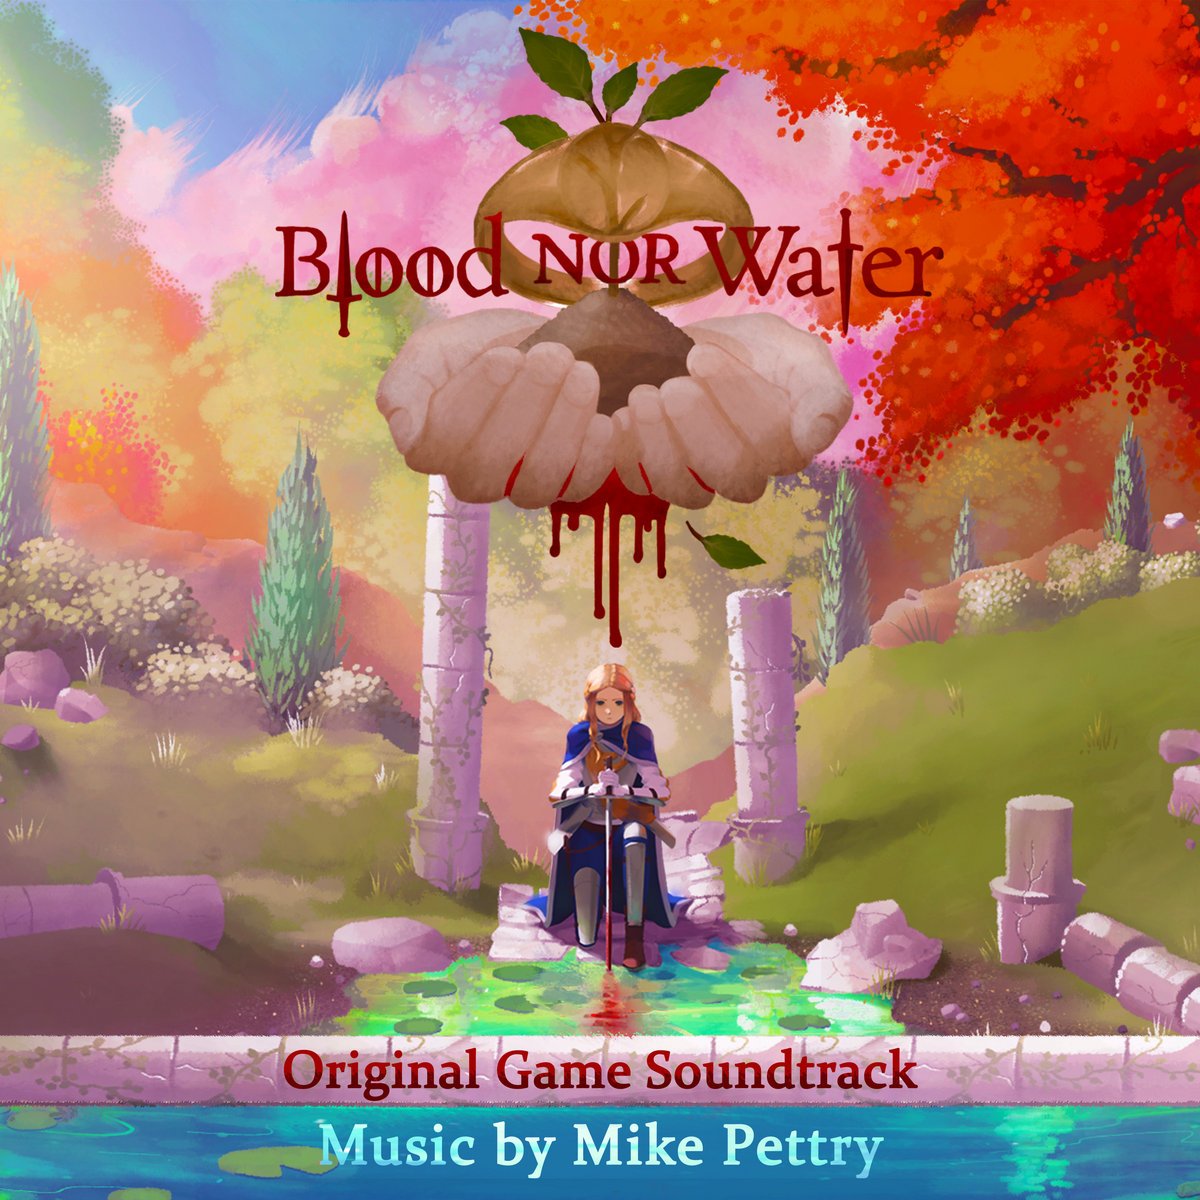 Blood Nor Water: Original soundtrack